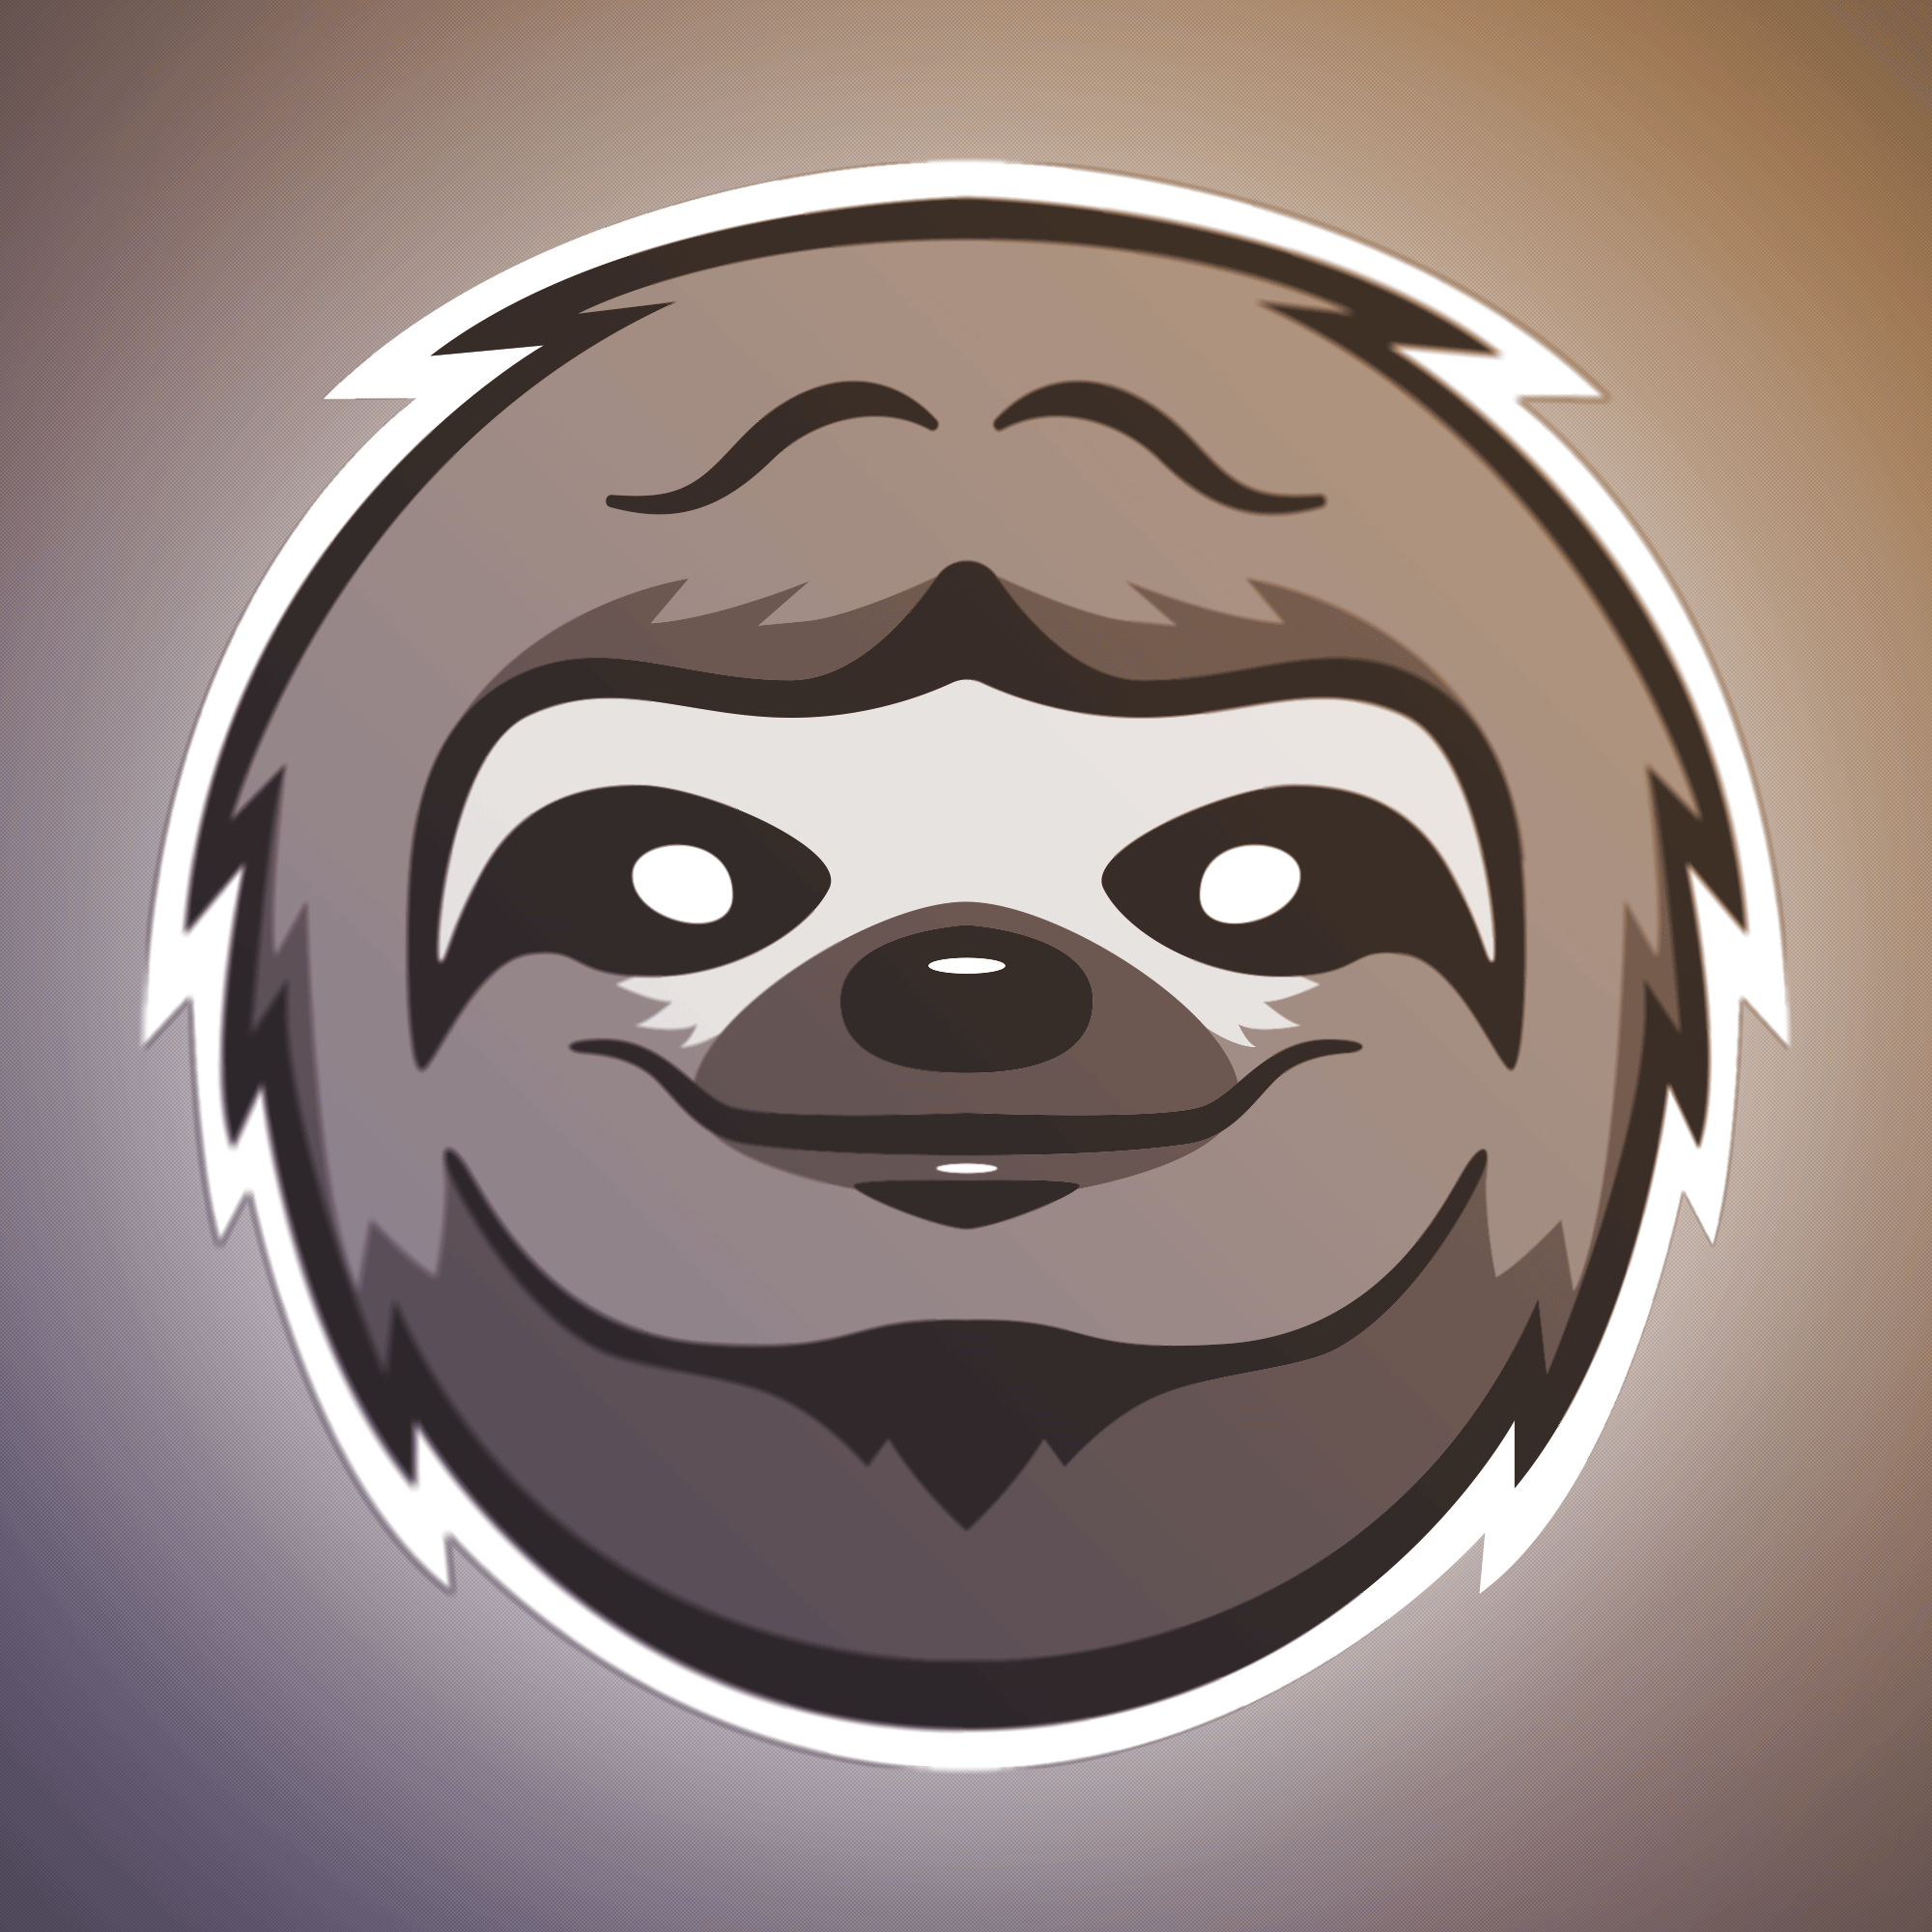 Sloth Logo - Sloth | Skillshare Projects